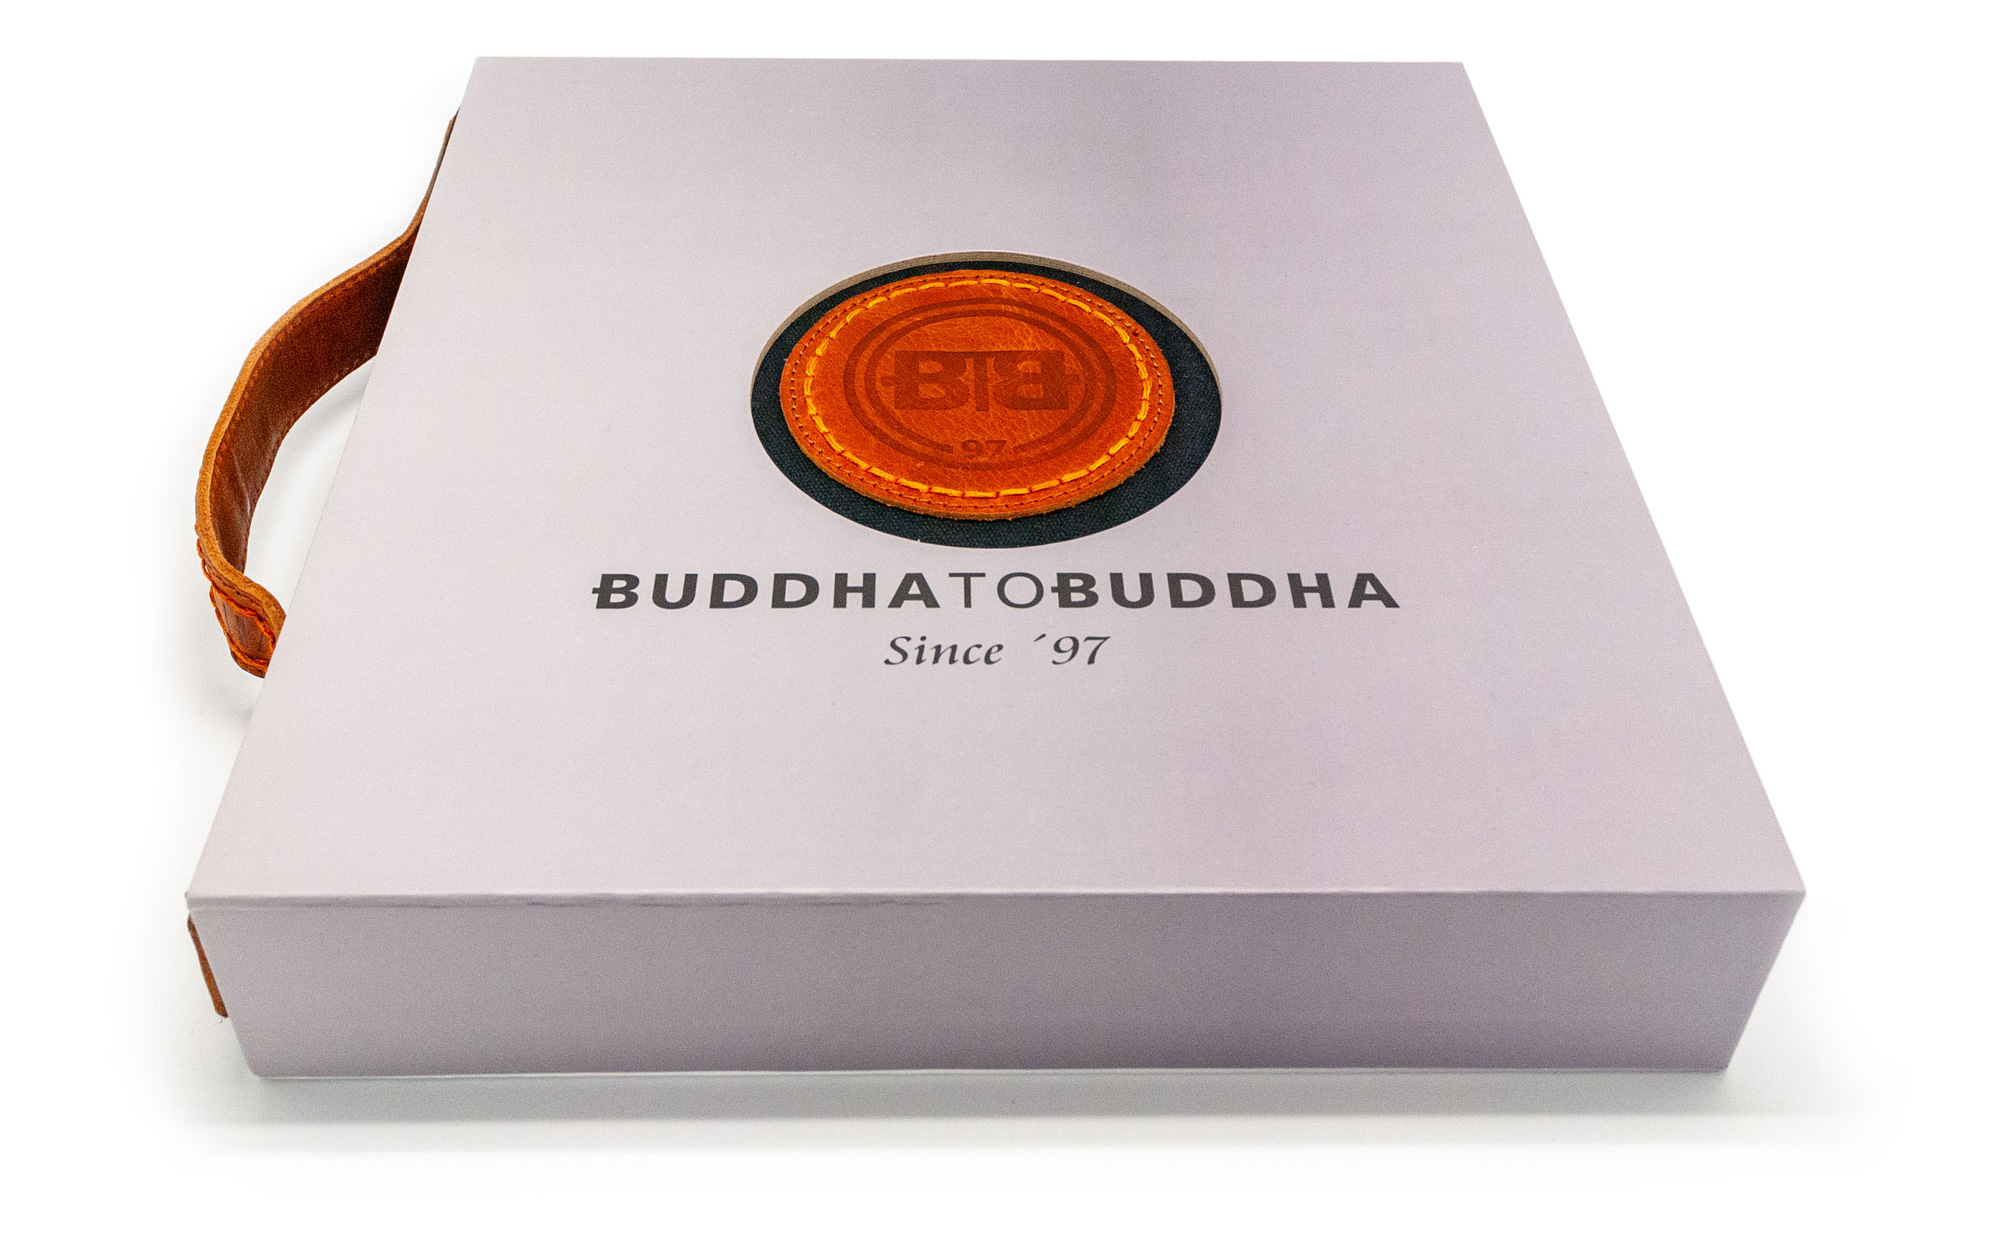 Buddha to Buddha - book and sleeve